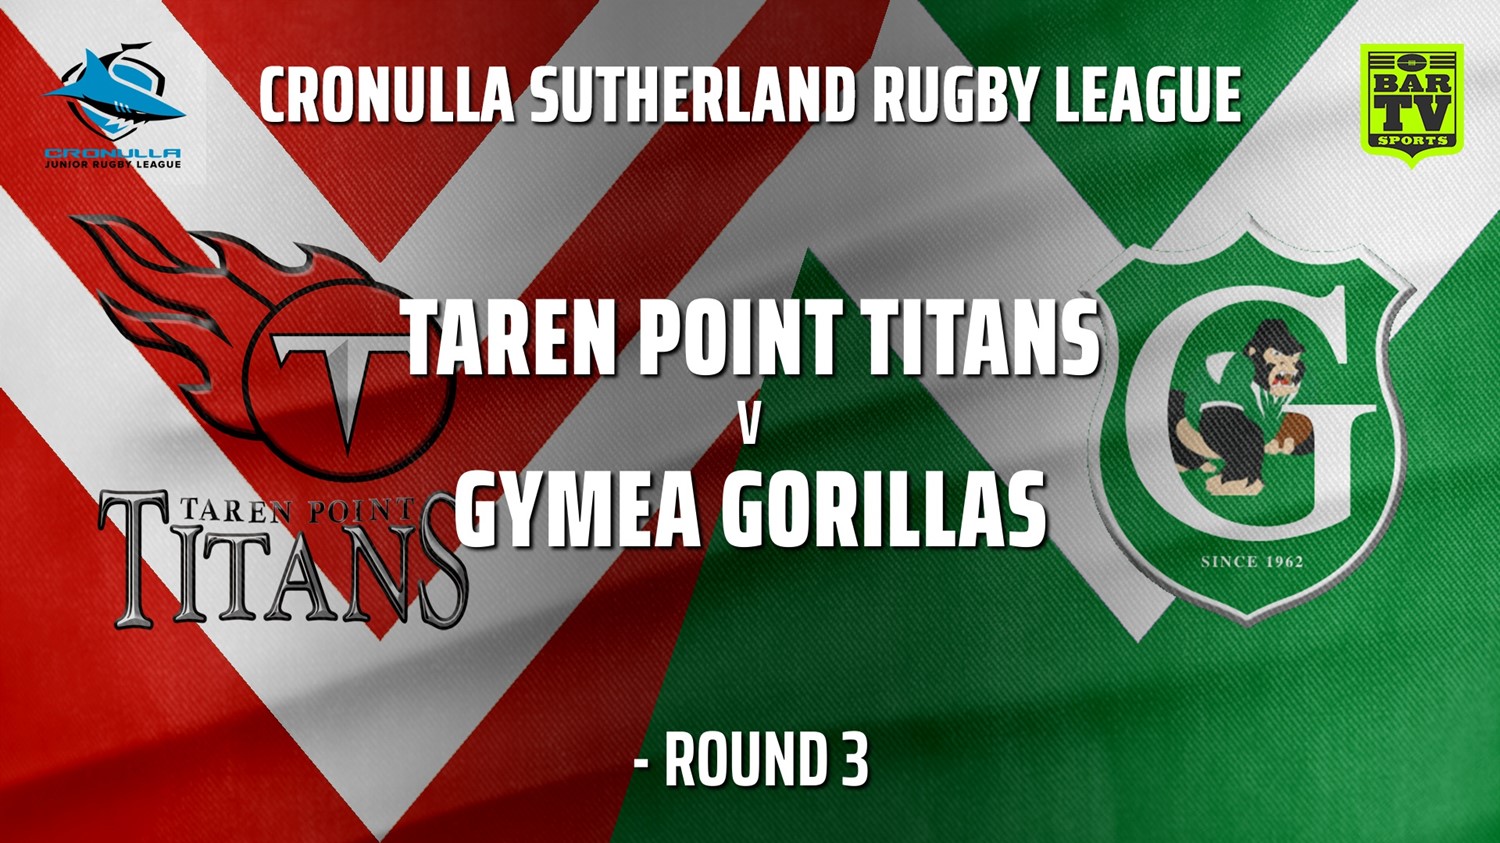 210516-Cronulla JRL- Blues Tag Under 12s - Round 3 - Taren Point Titans v Gymea Gorillas Minigame Slate Image